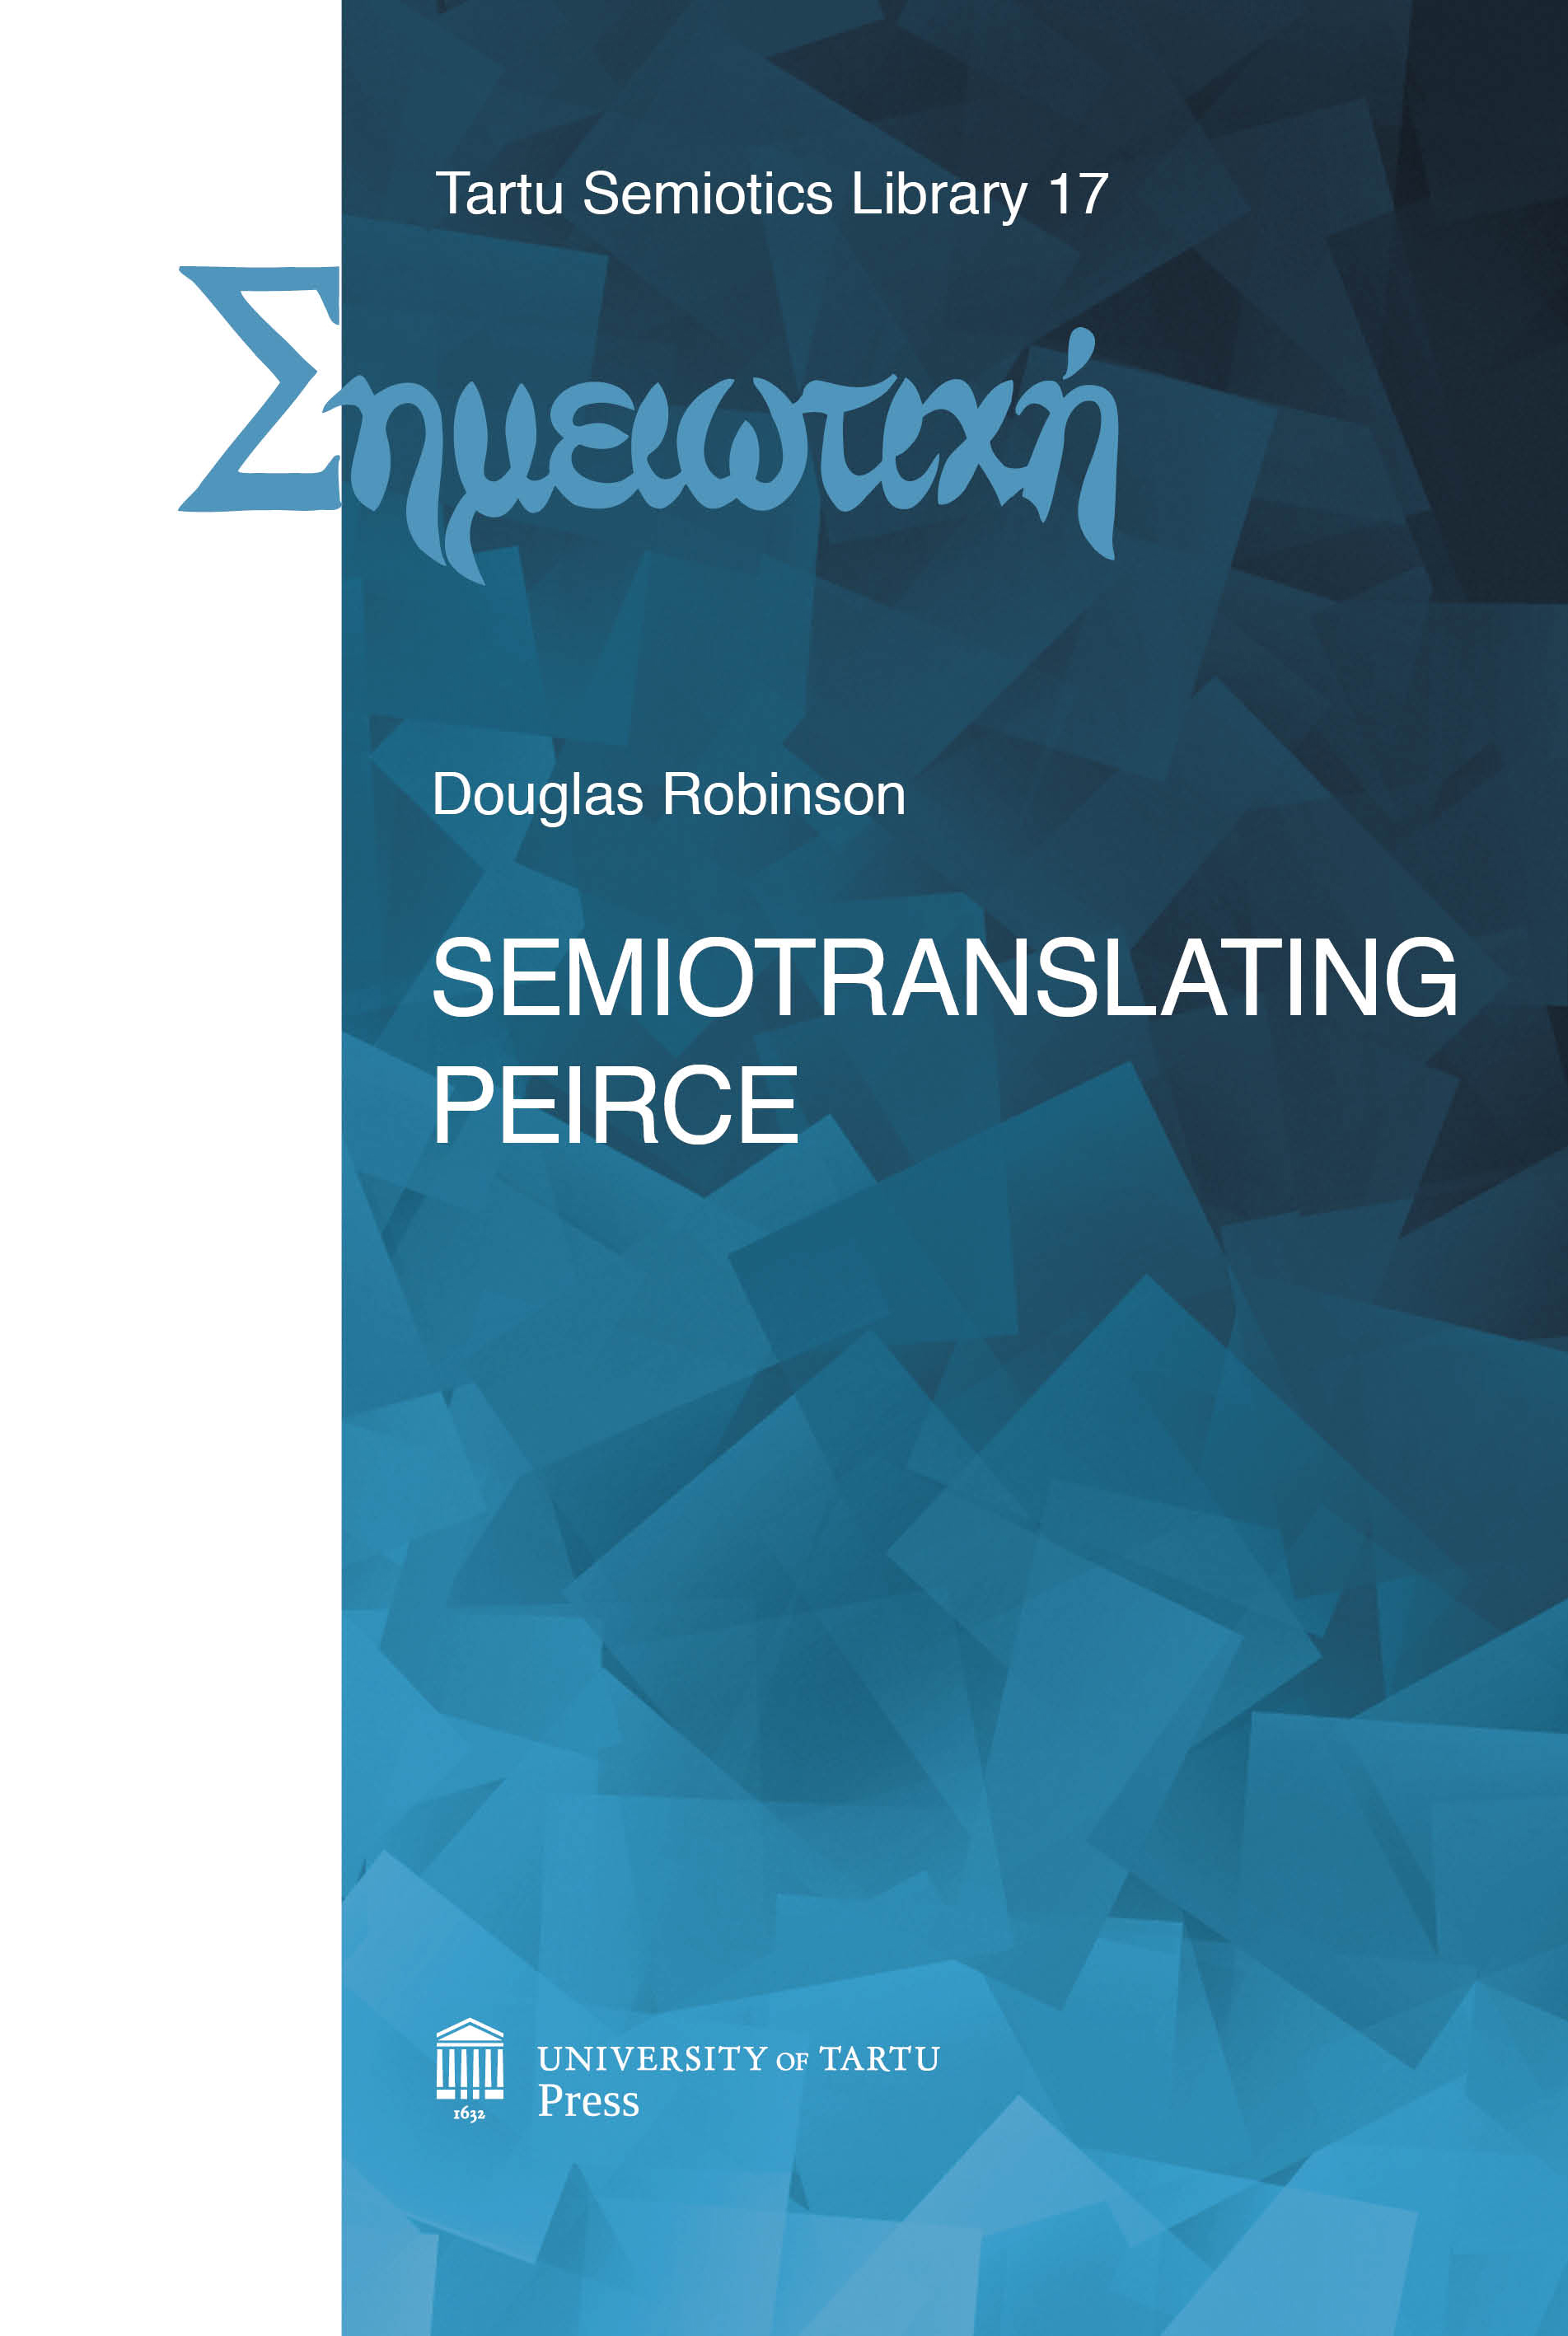 Chapter 1. - Defining semiotranslation